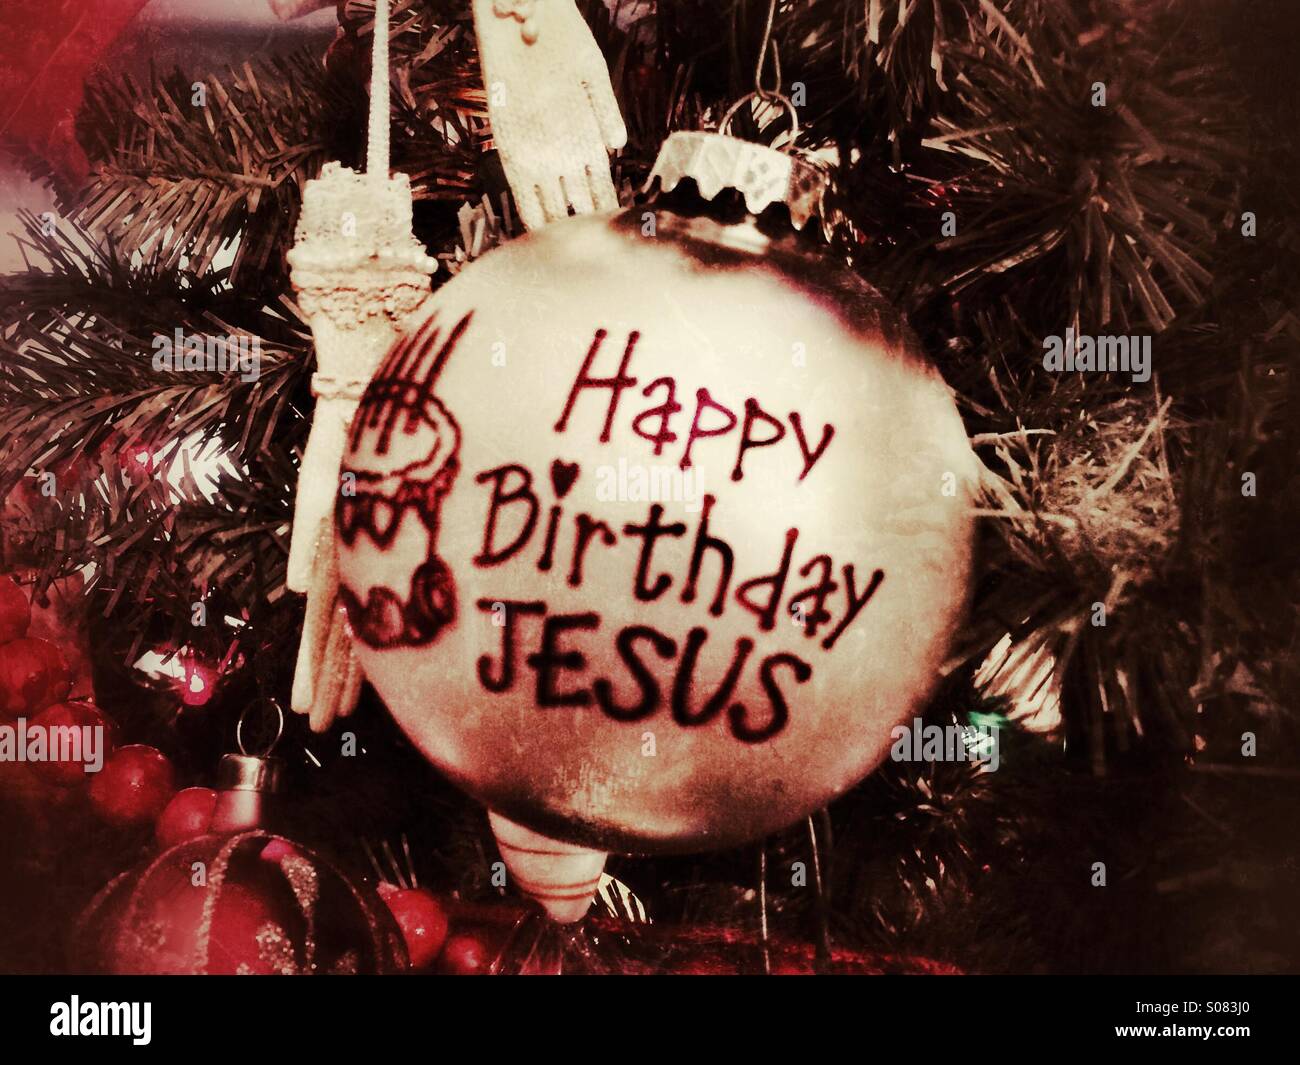 Happy Birthday Jesus ornament on a Christmas tree Stock Photo